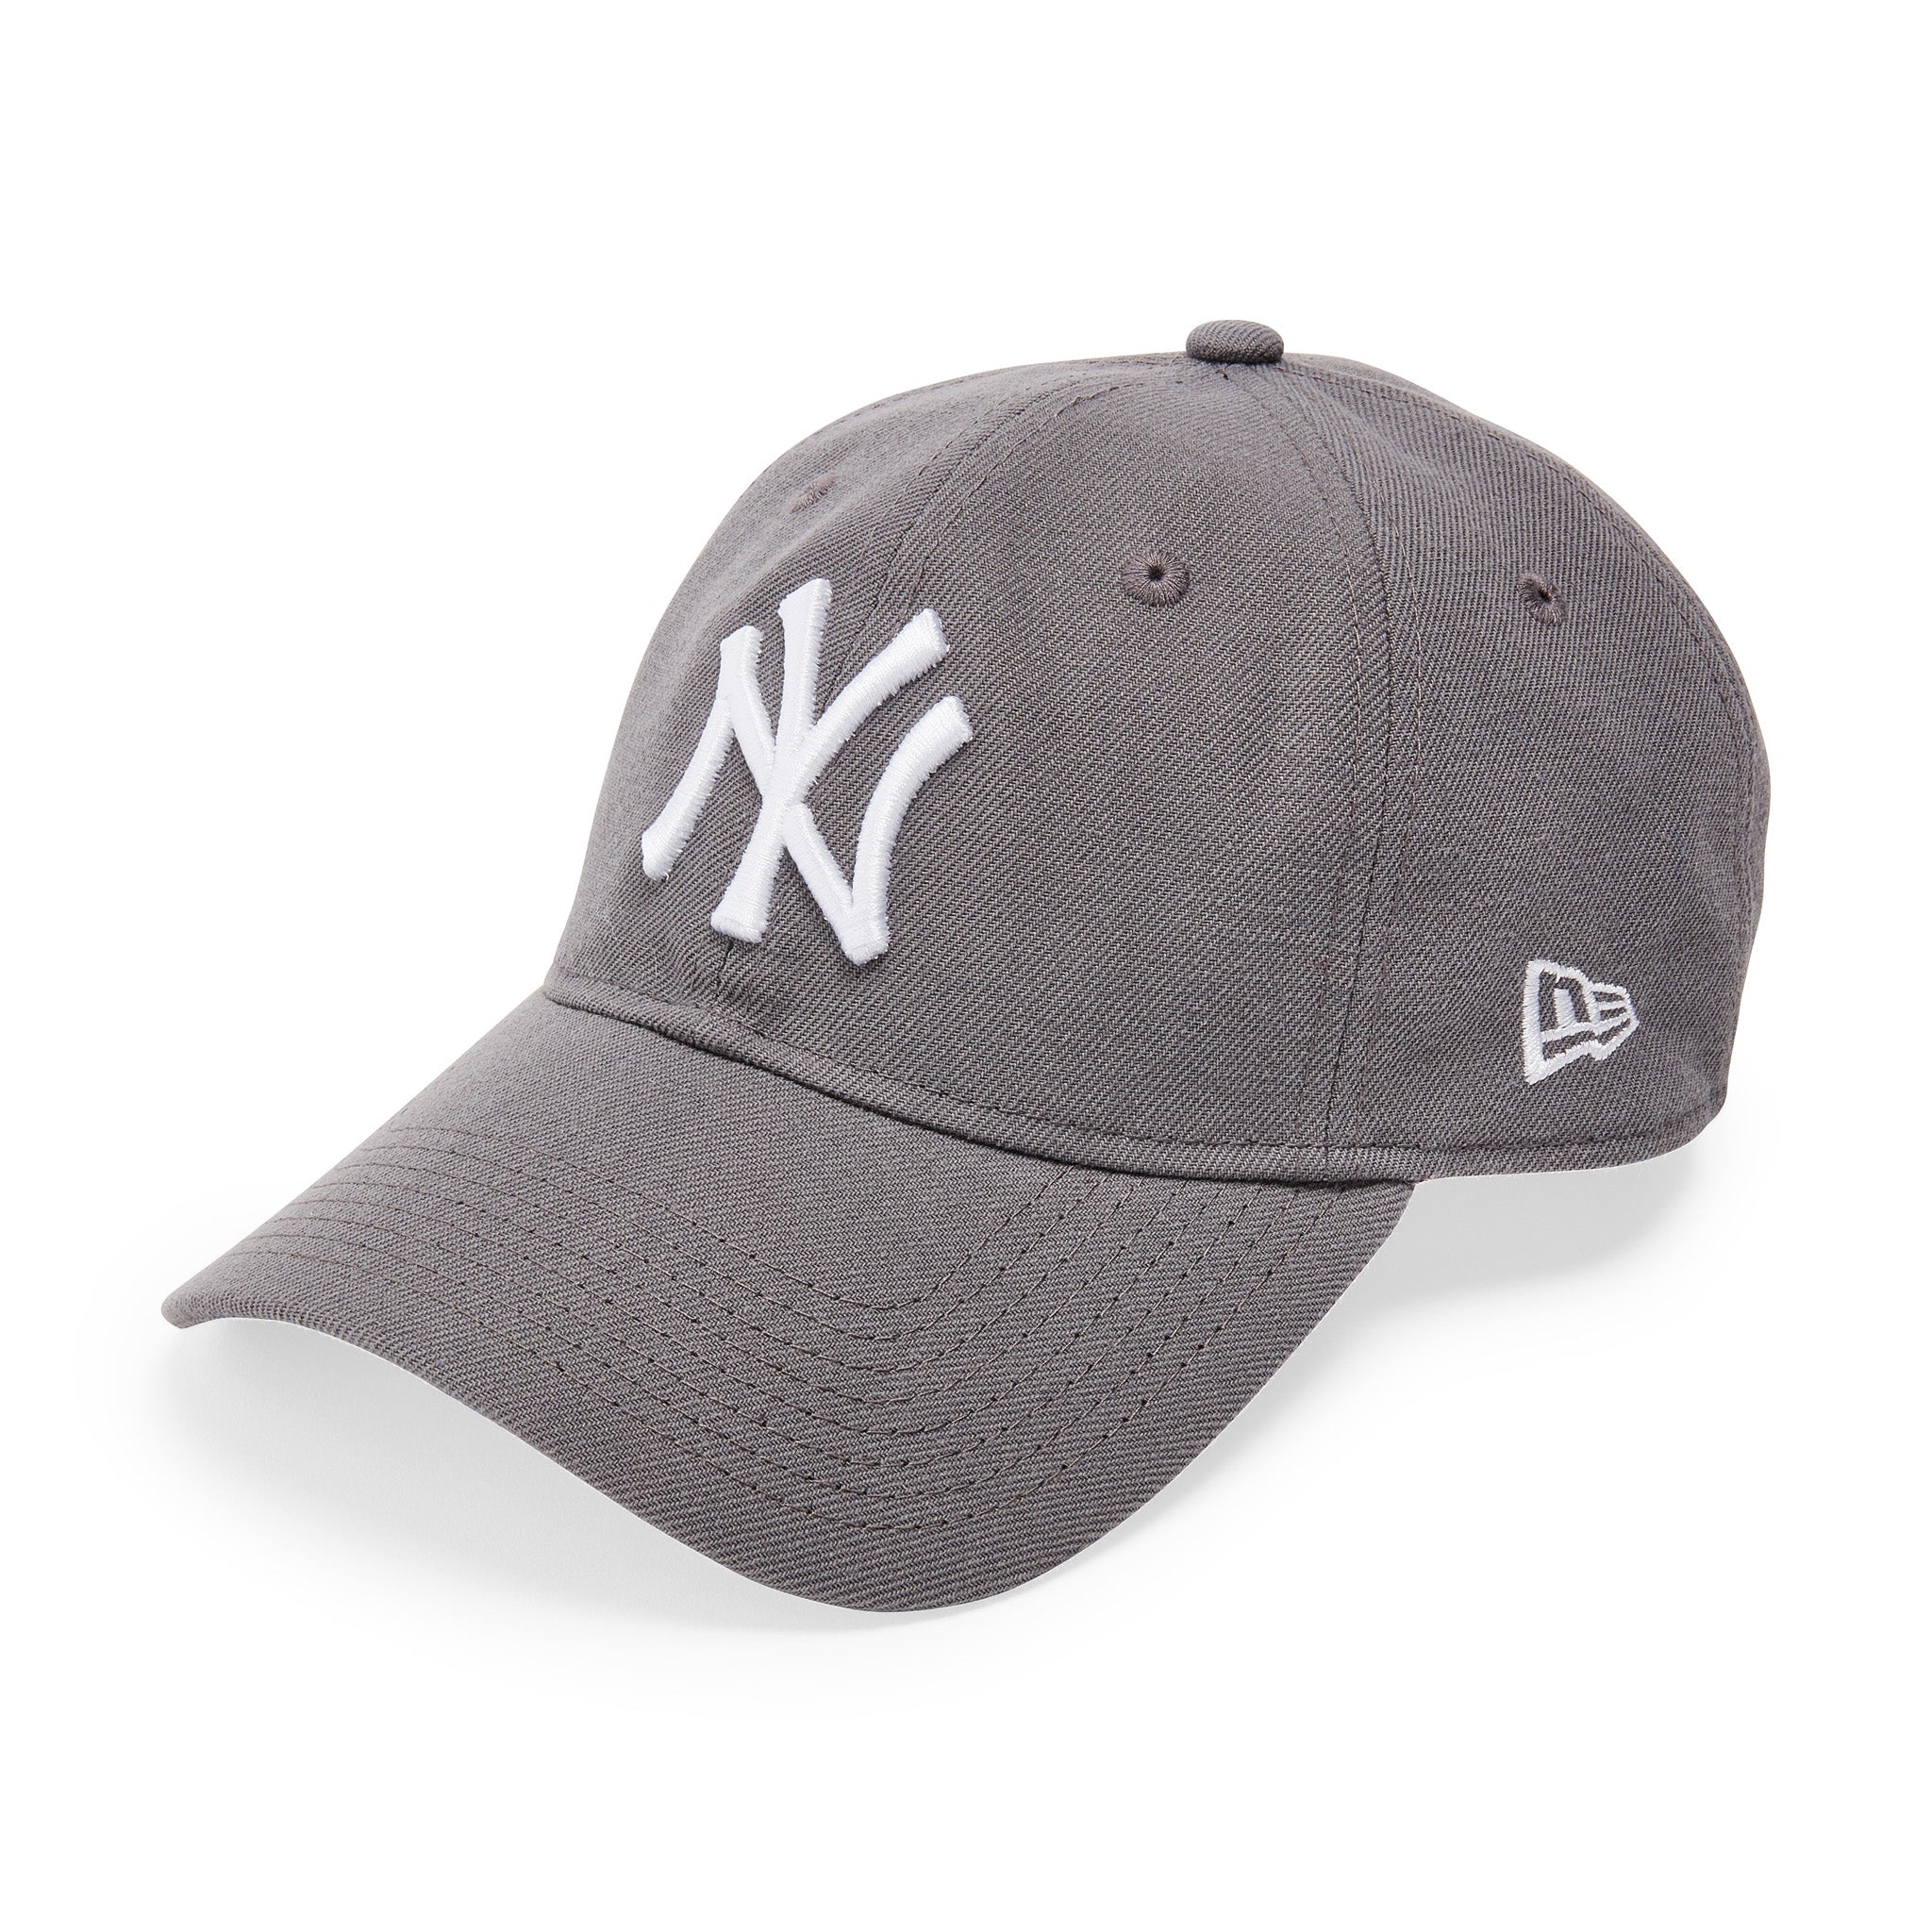 MoMA NY Yankees Adjustable Baseball Cap - Storm Gray